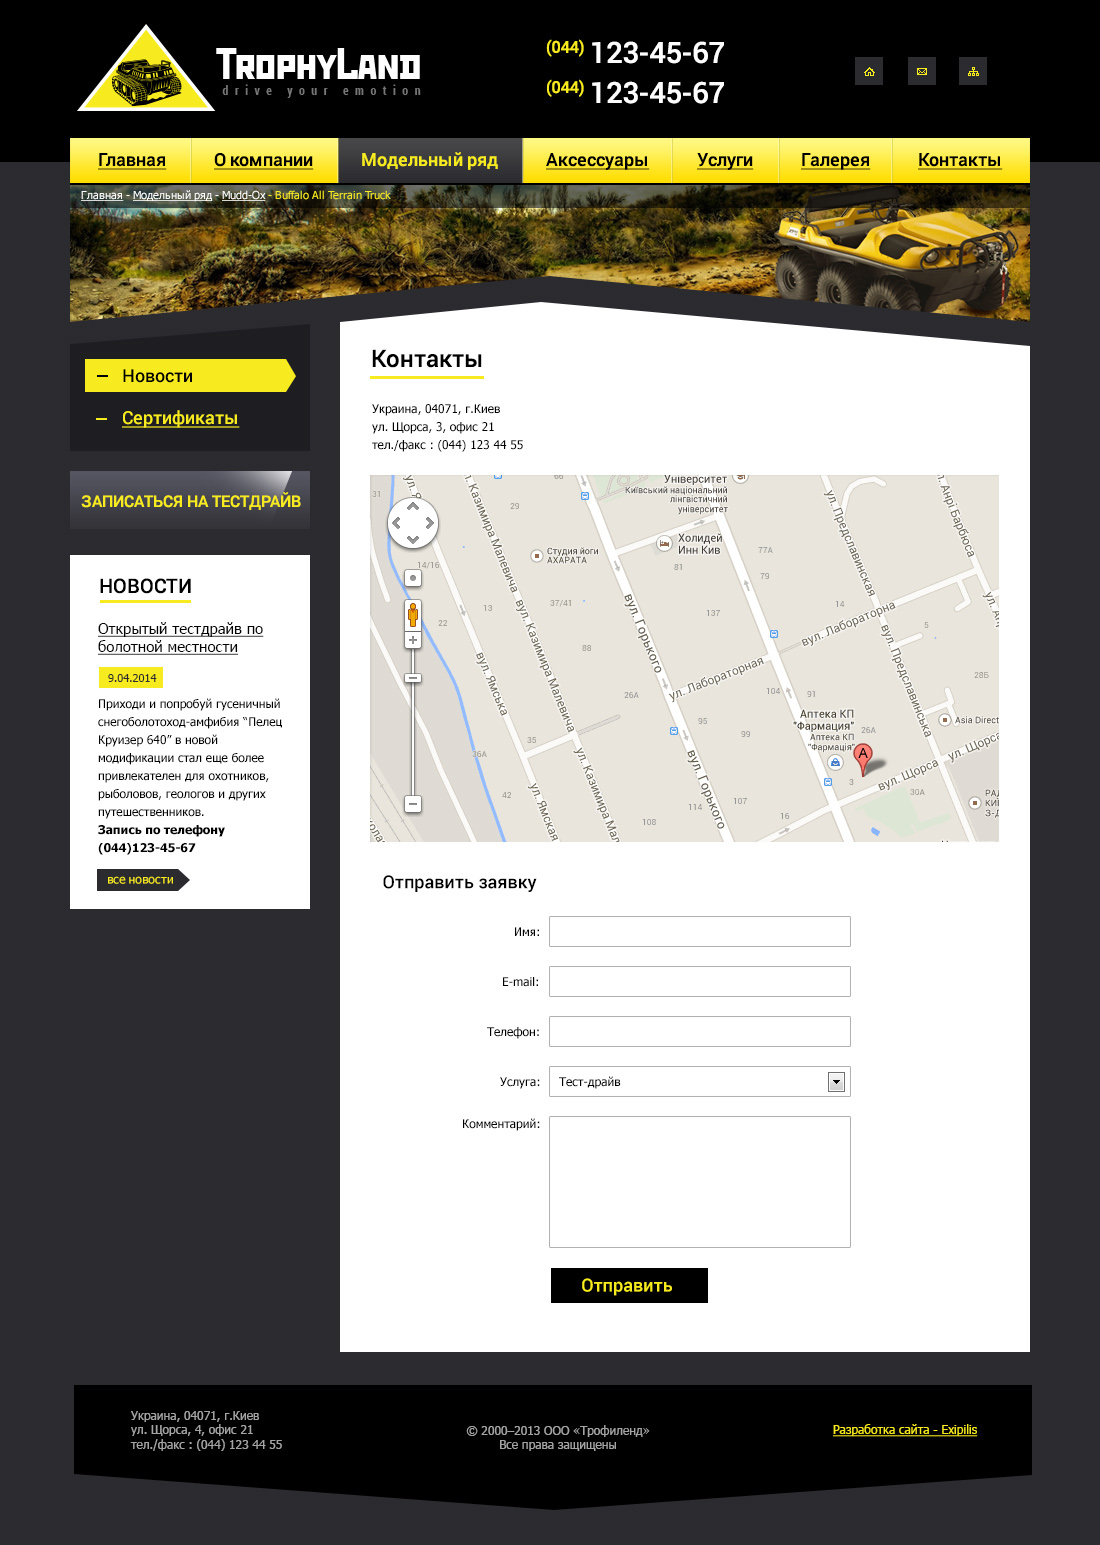 Contact page design of TrophyLand website